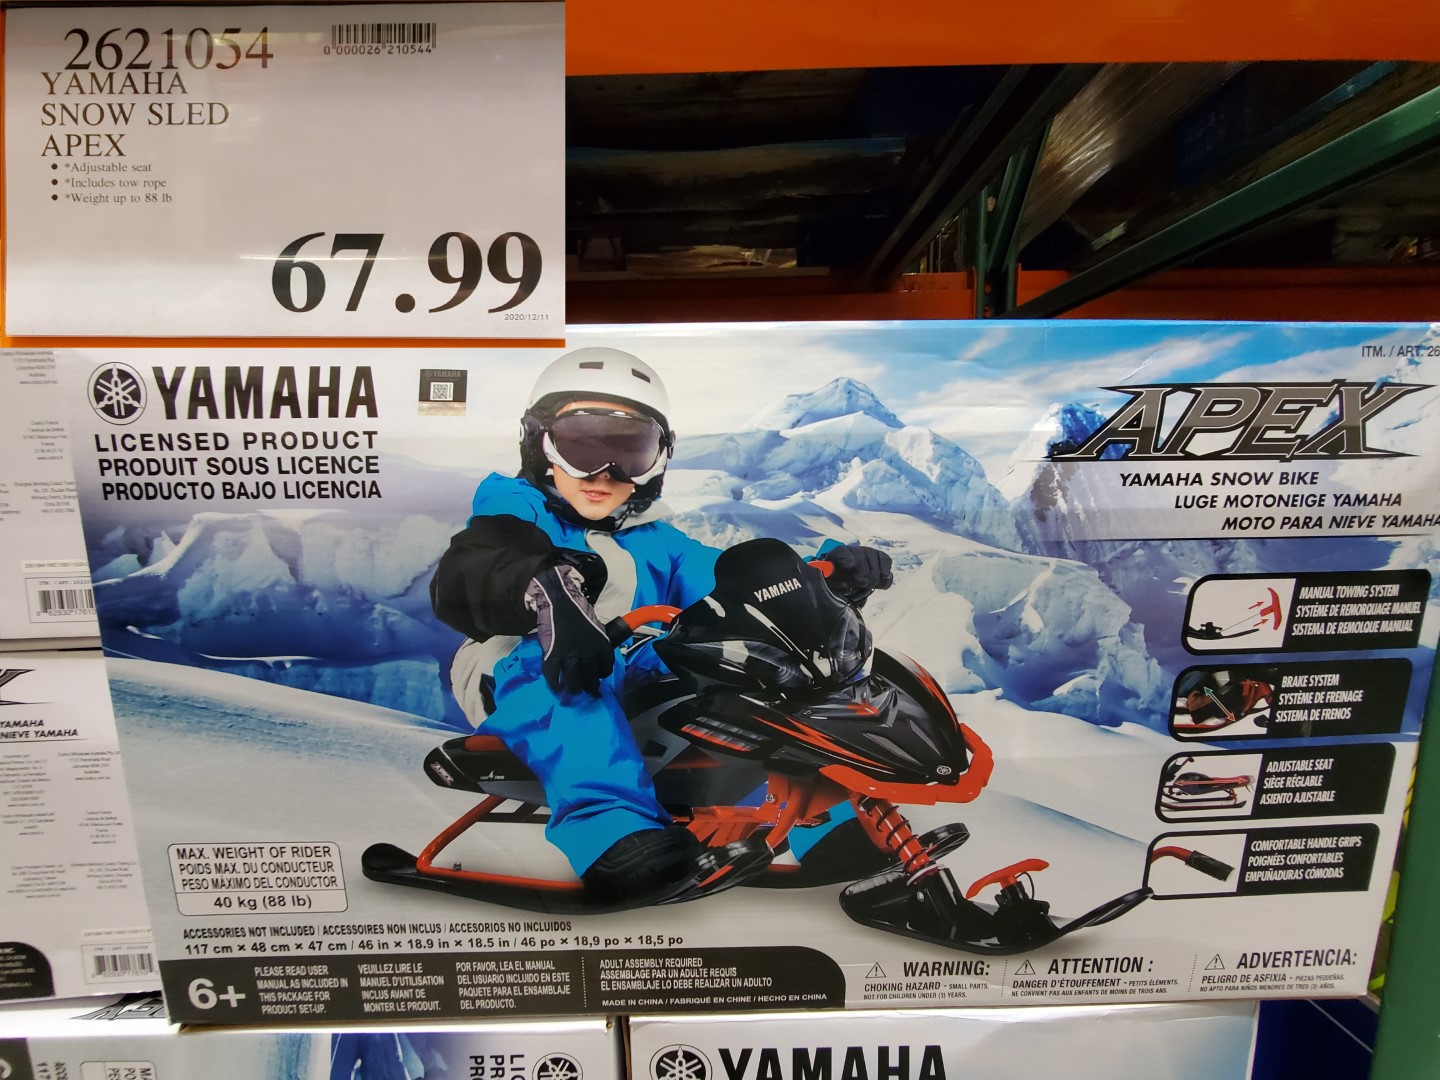 Yamaha APEX snow sled